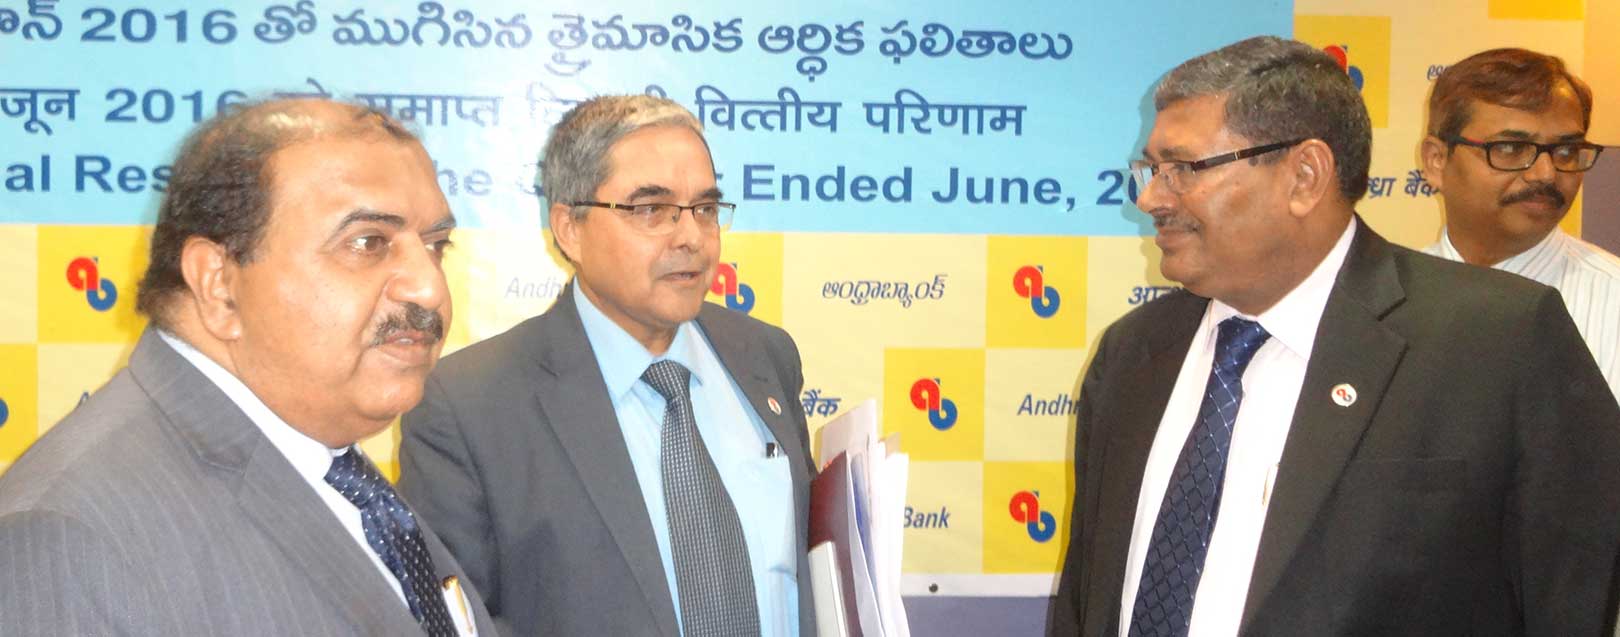 Andhra Bank raises Rs.1,900 cr via bonds in April-June quarter